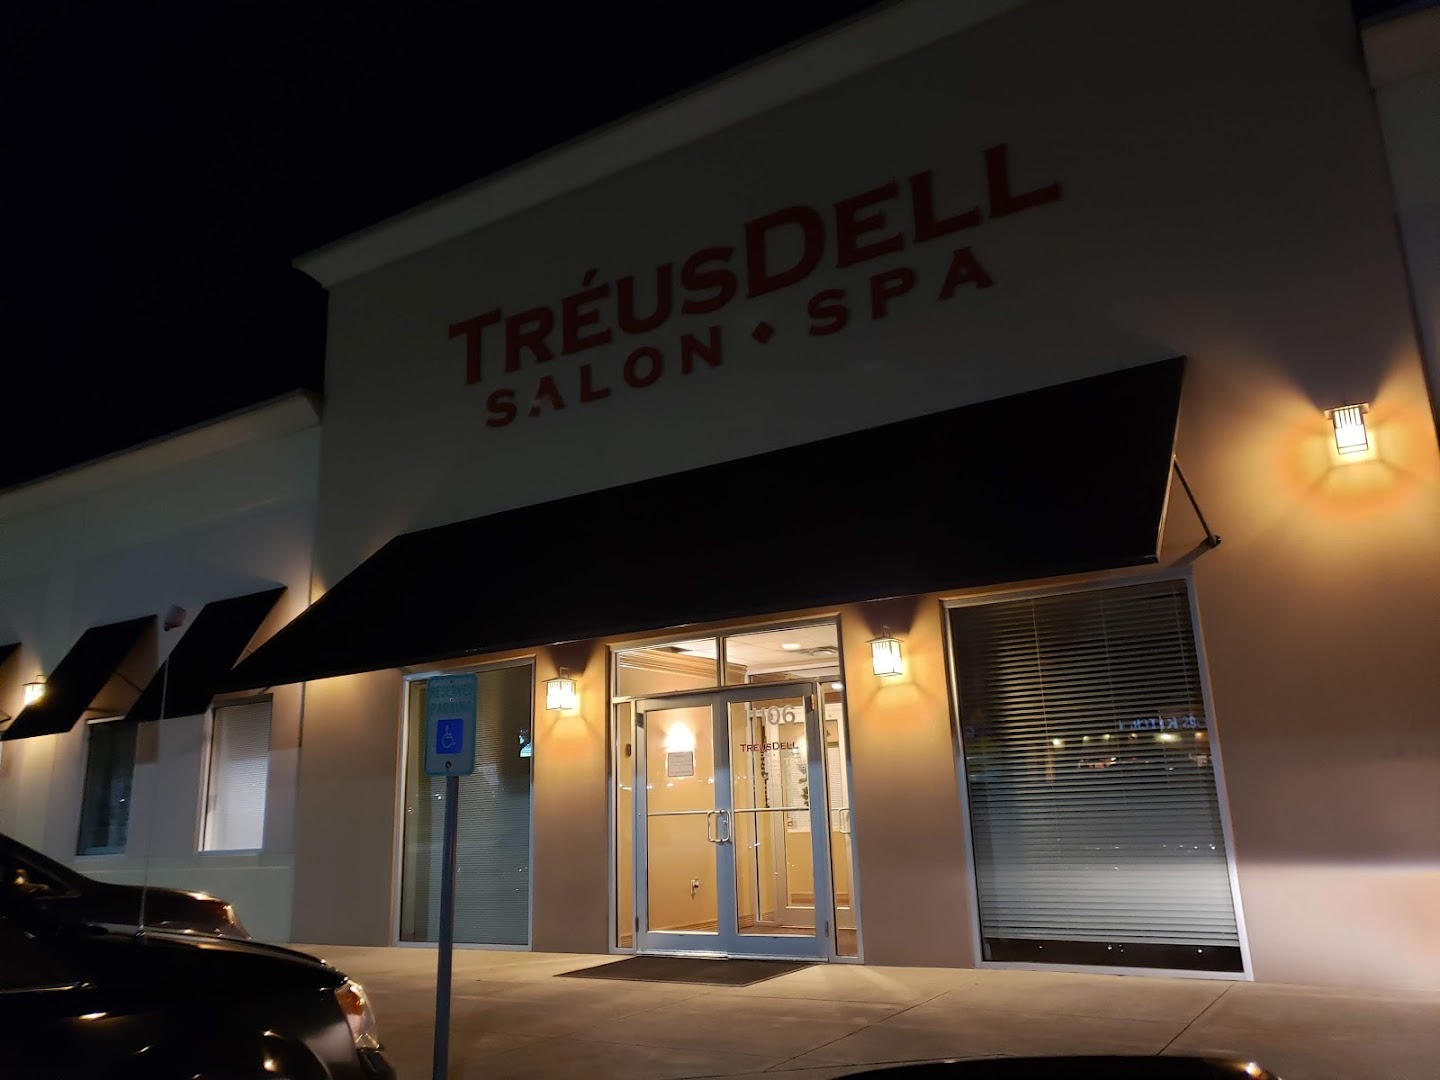 Treusdell Salon & Spa